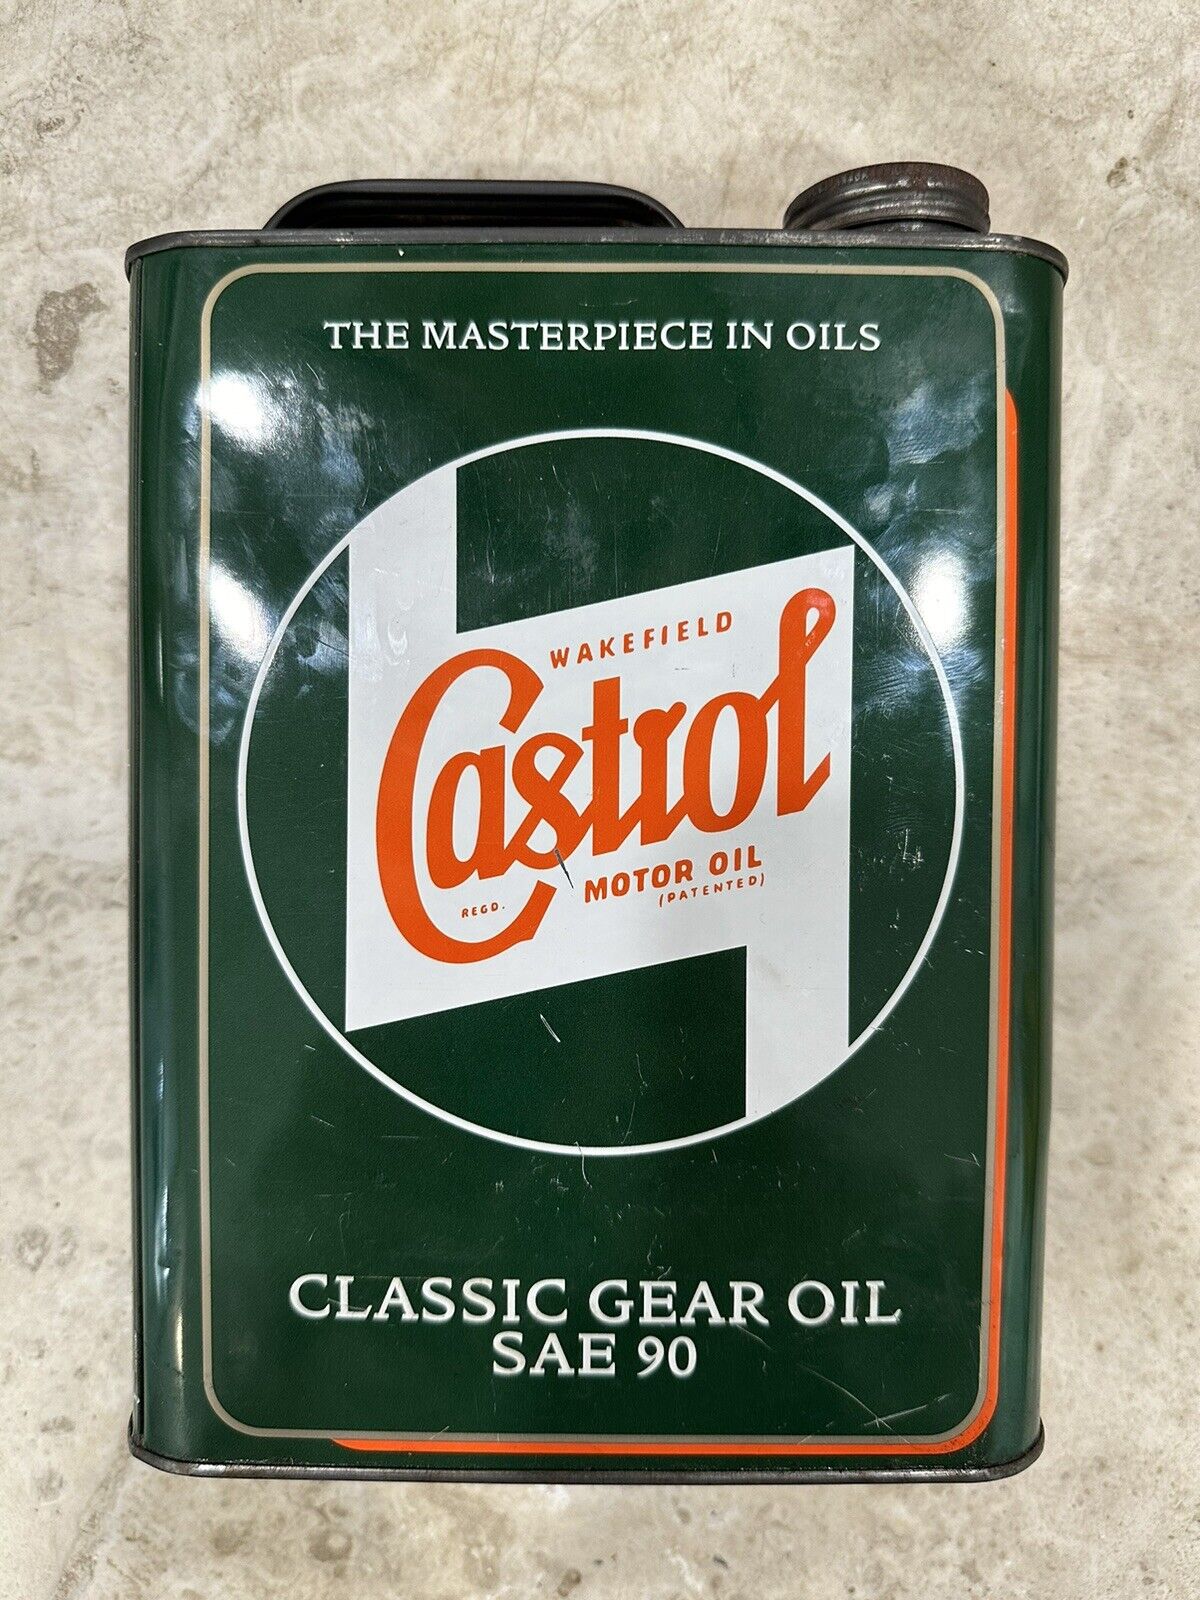 Vintage 1940’s Castrol Motor Oil Can NOS FULL RARE Original USA Masterpiece In